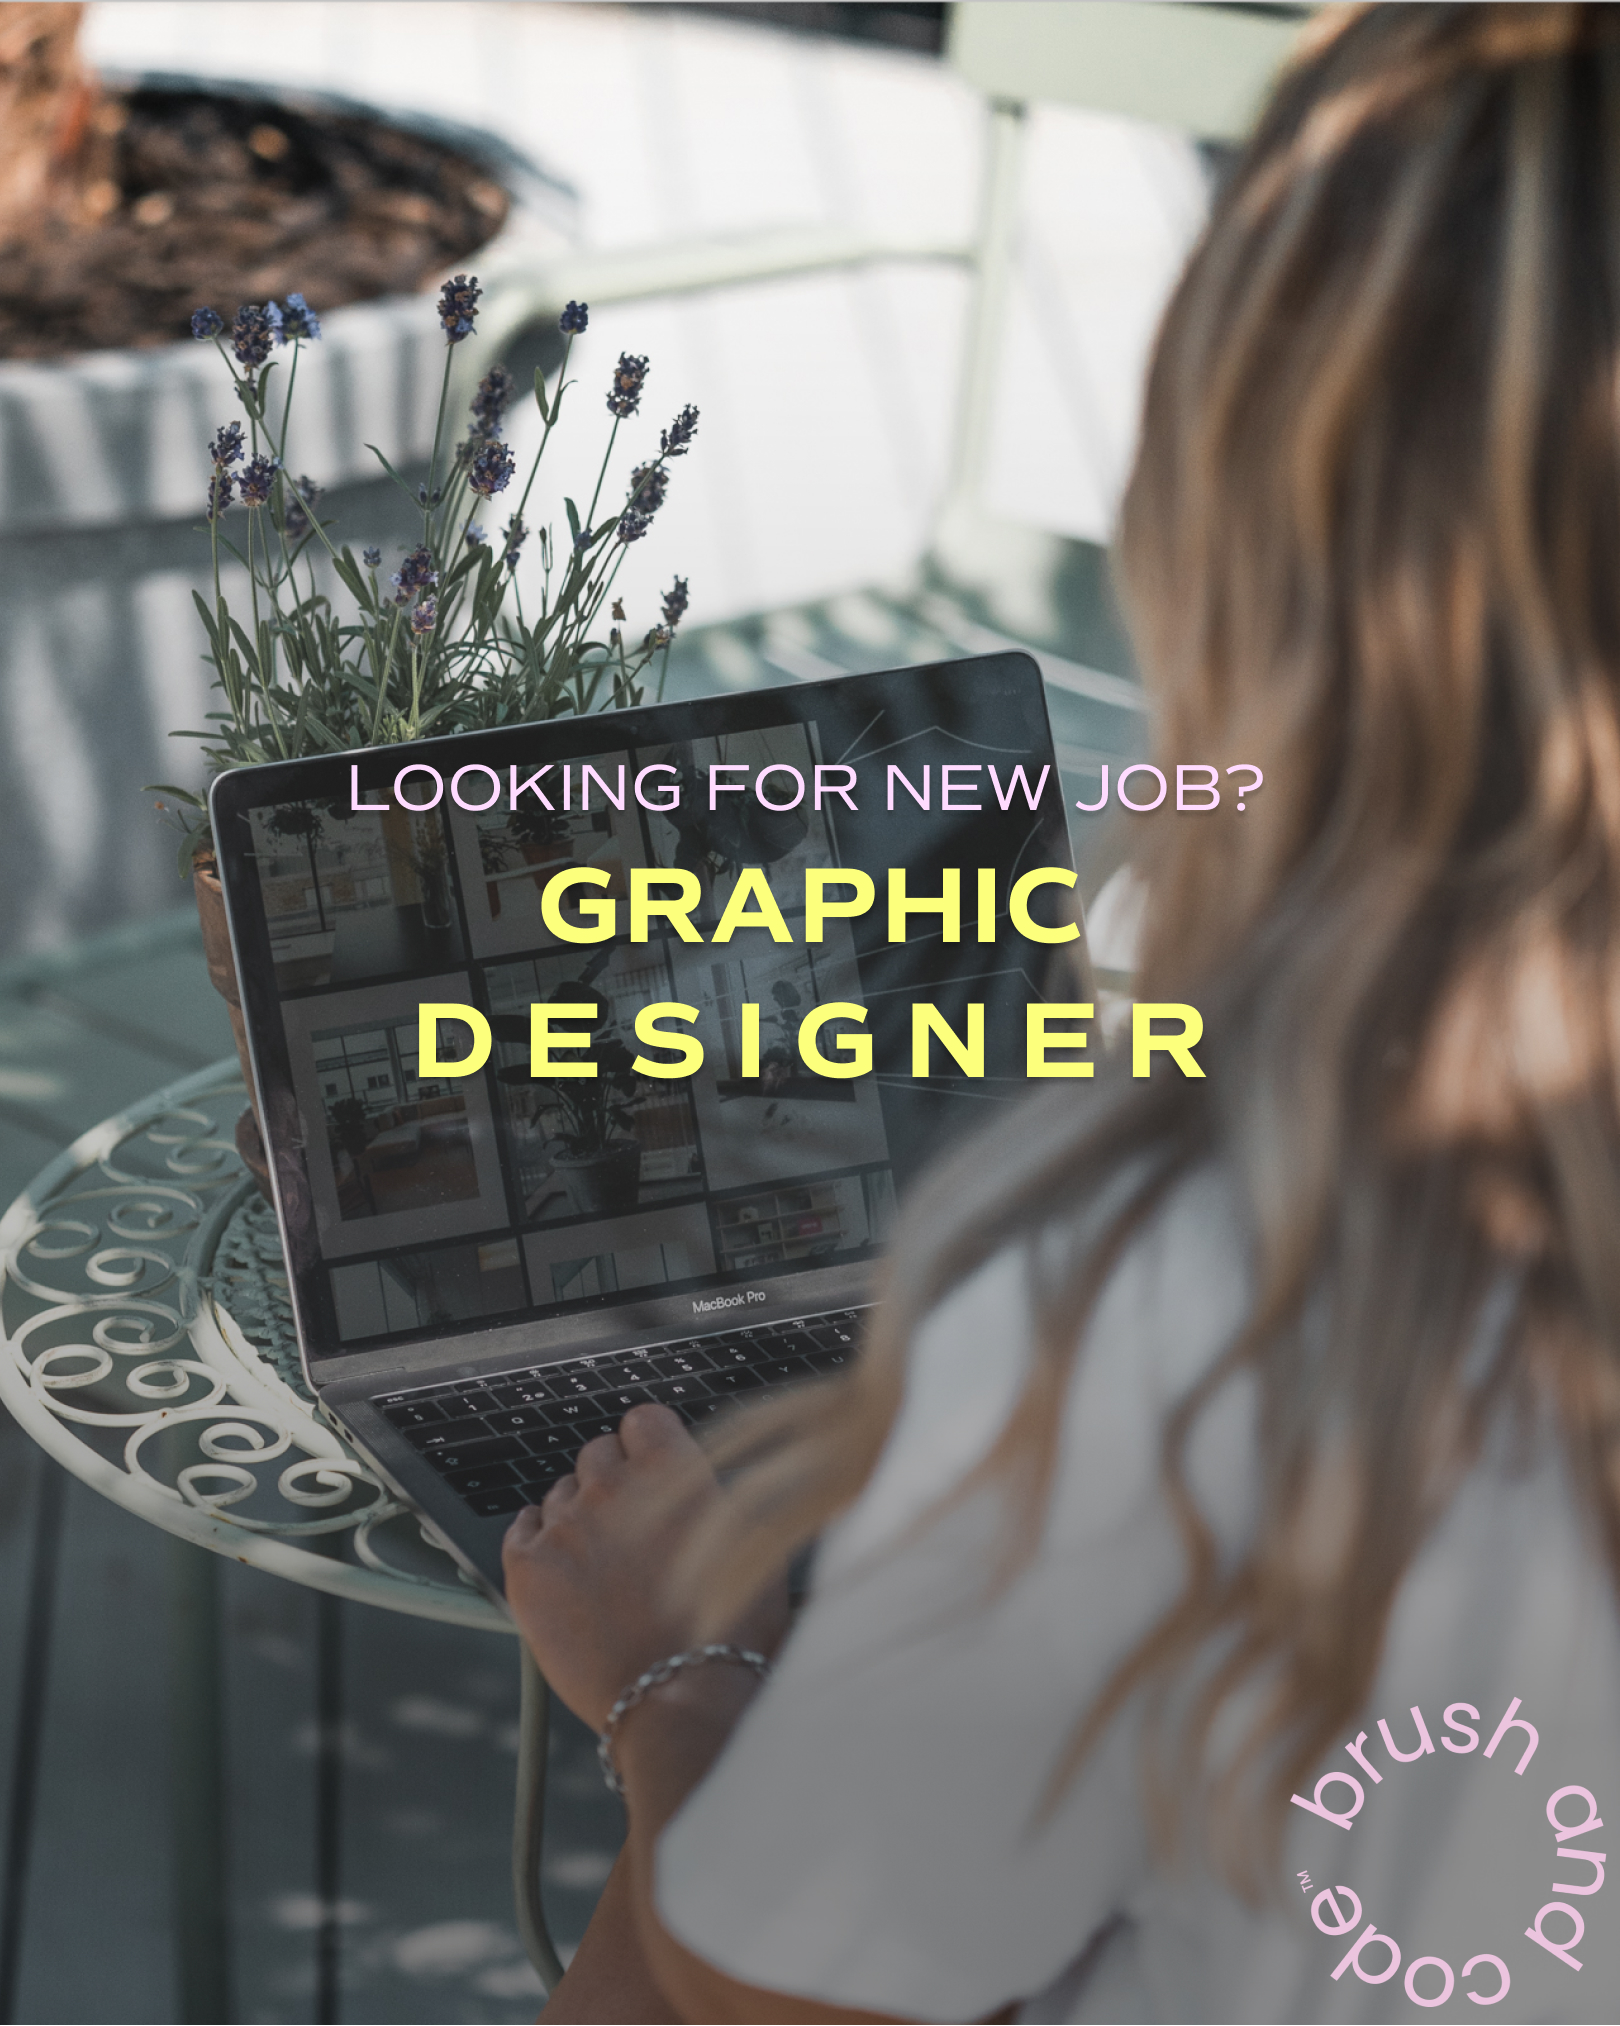 Letar du efter ett nytt jobb som grafisk designer?